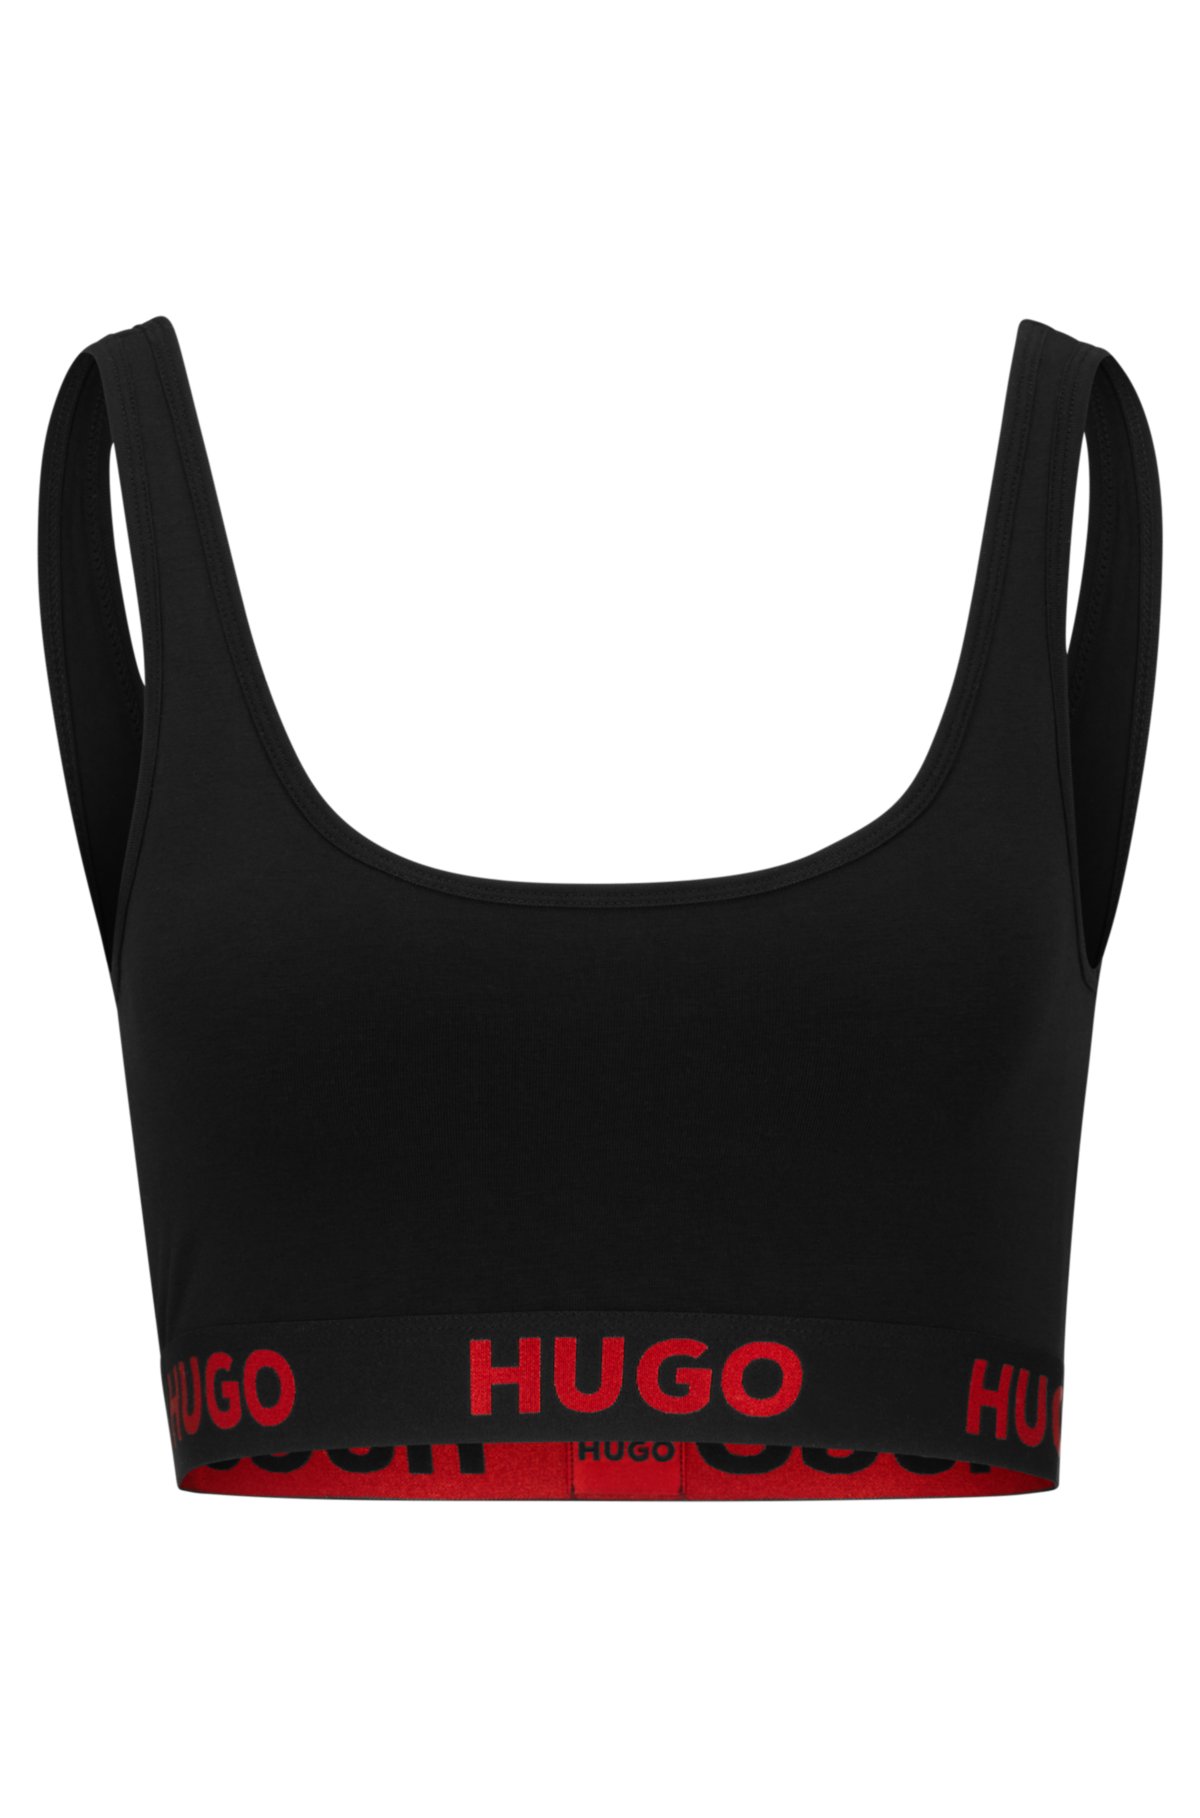 HUGO - logo bralette with Stretch-cotton band